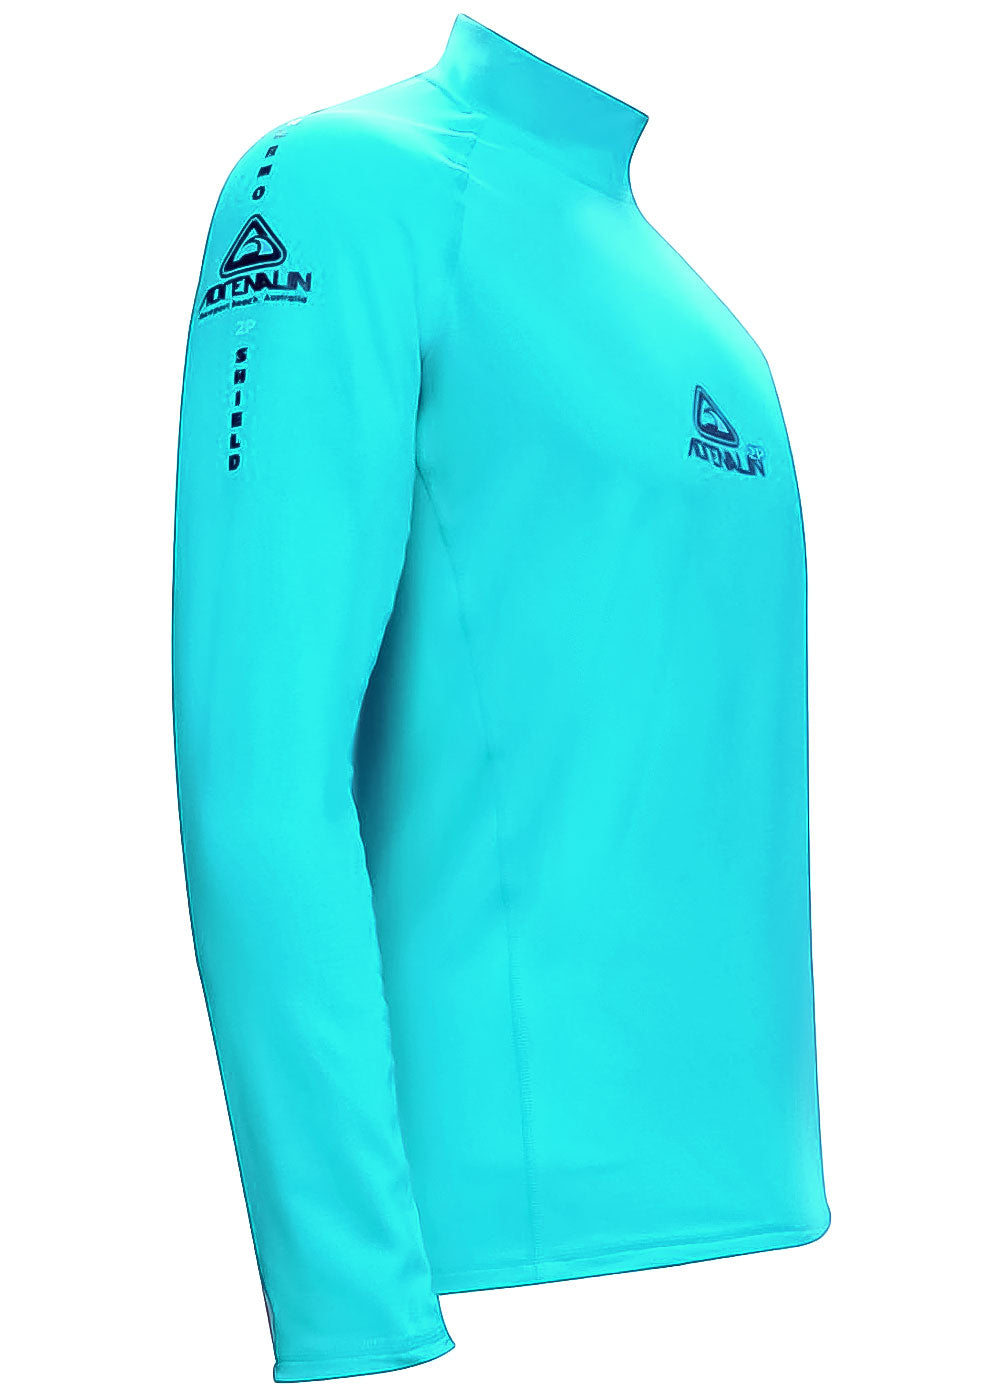 Adrenalin 2P Thermal Long Sleeve Rash Guard Aqua buy online rashie